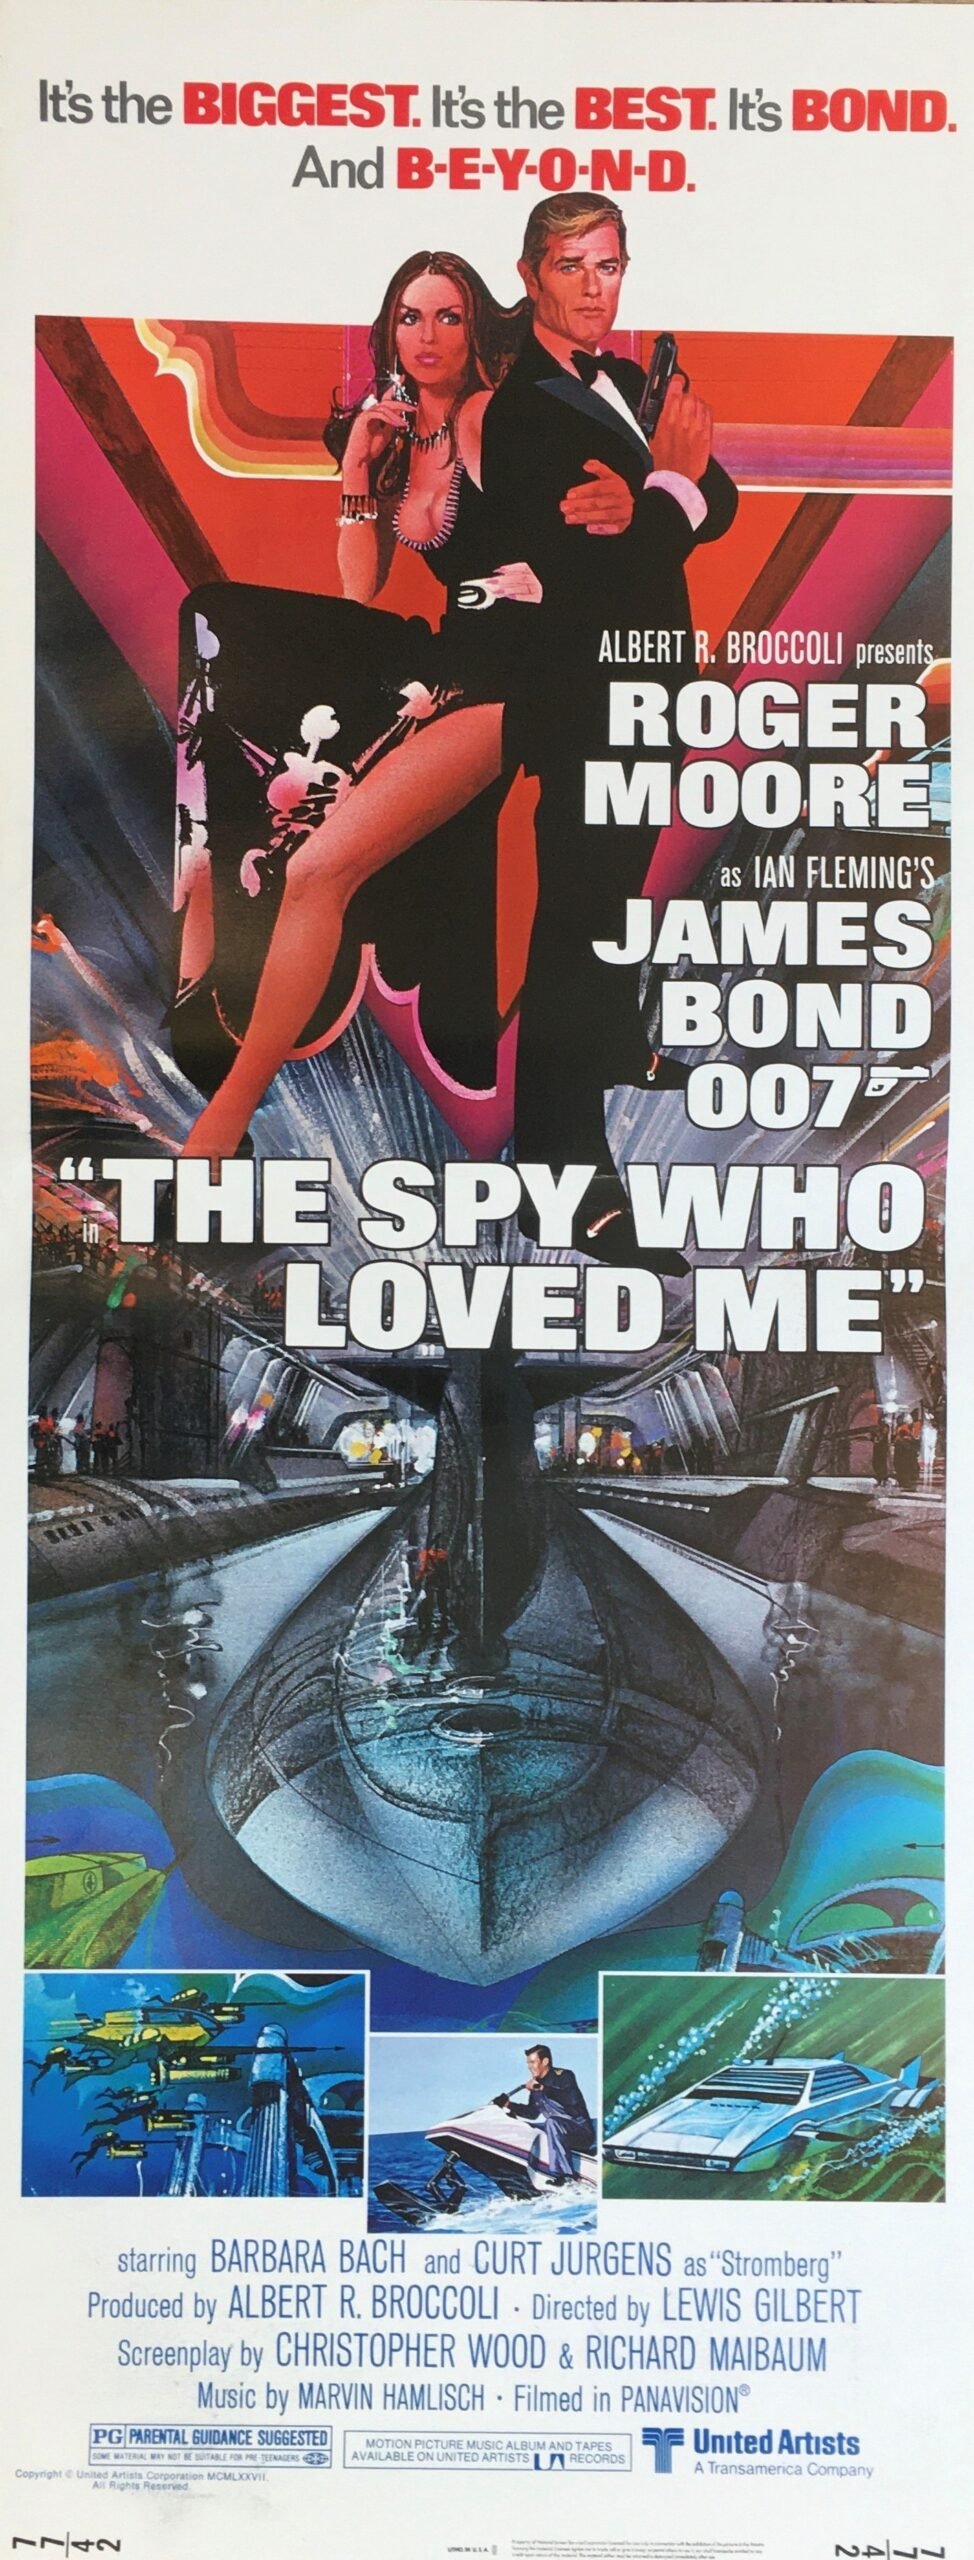 Vintage original US Insert film poster for The Spy Who Loved Me starring Roger Moore as James Bond.